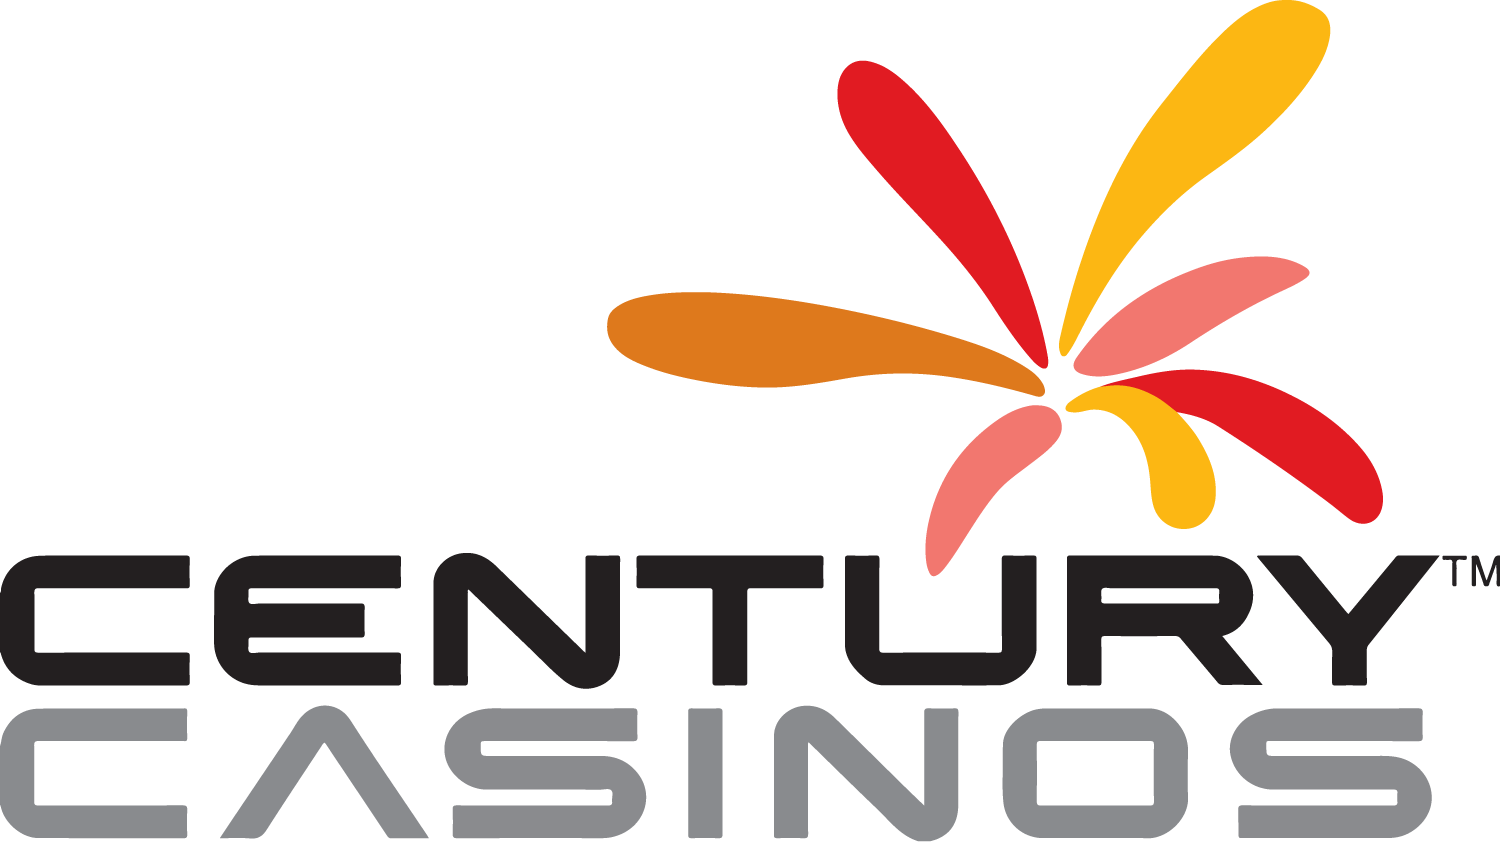 Century Casinos logo large (transparent PNG)